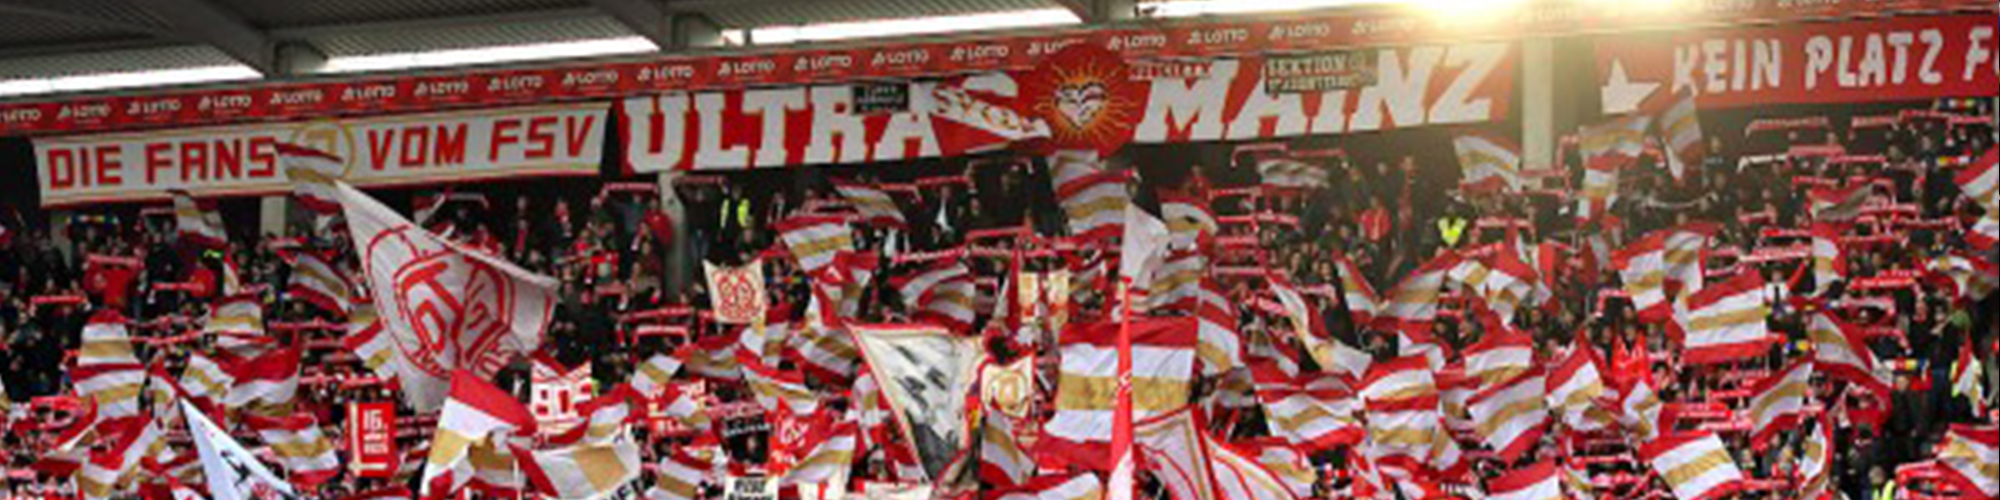 Mainz 05 Tickets & Experiences